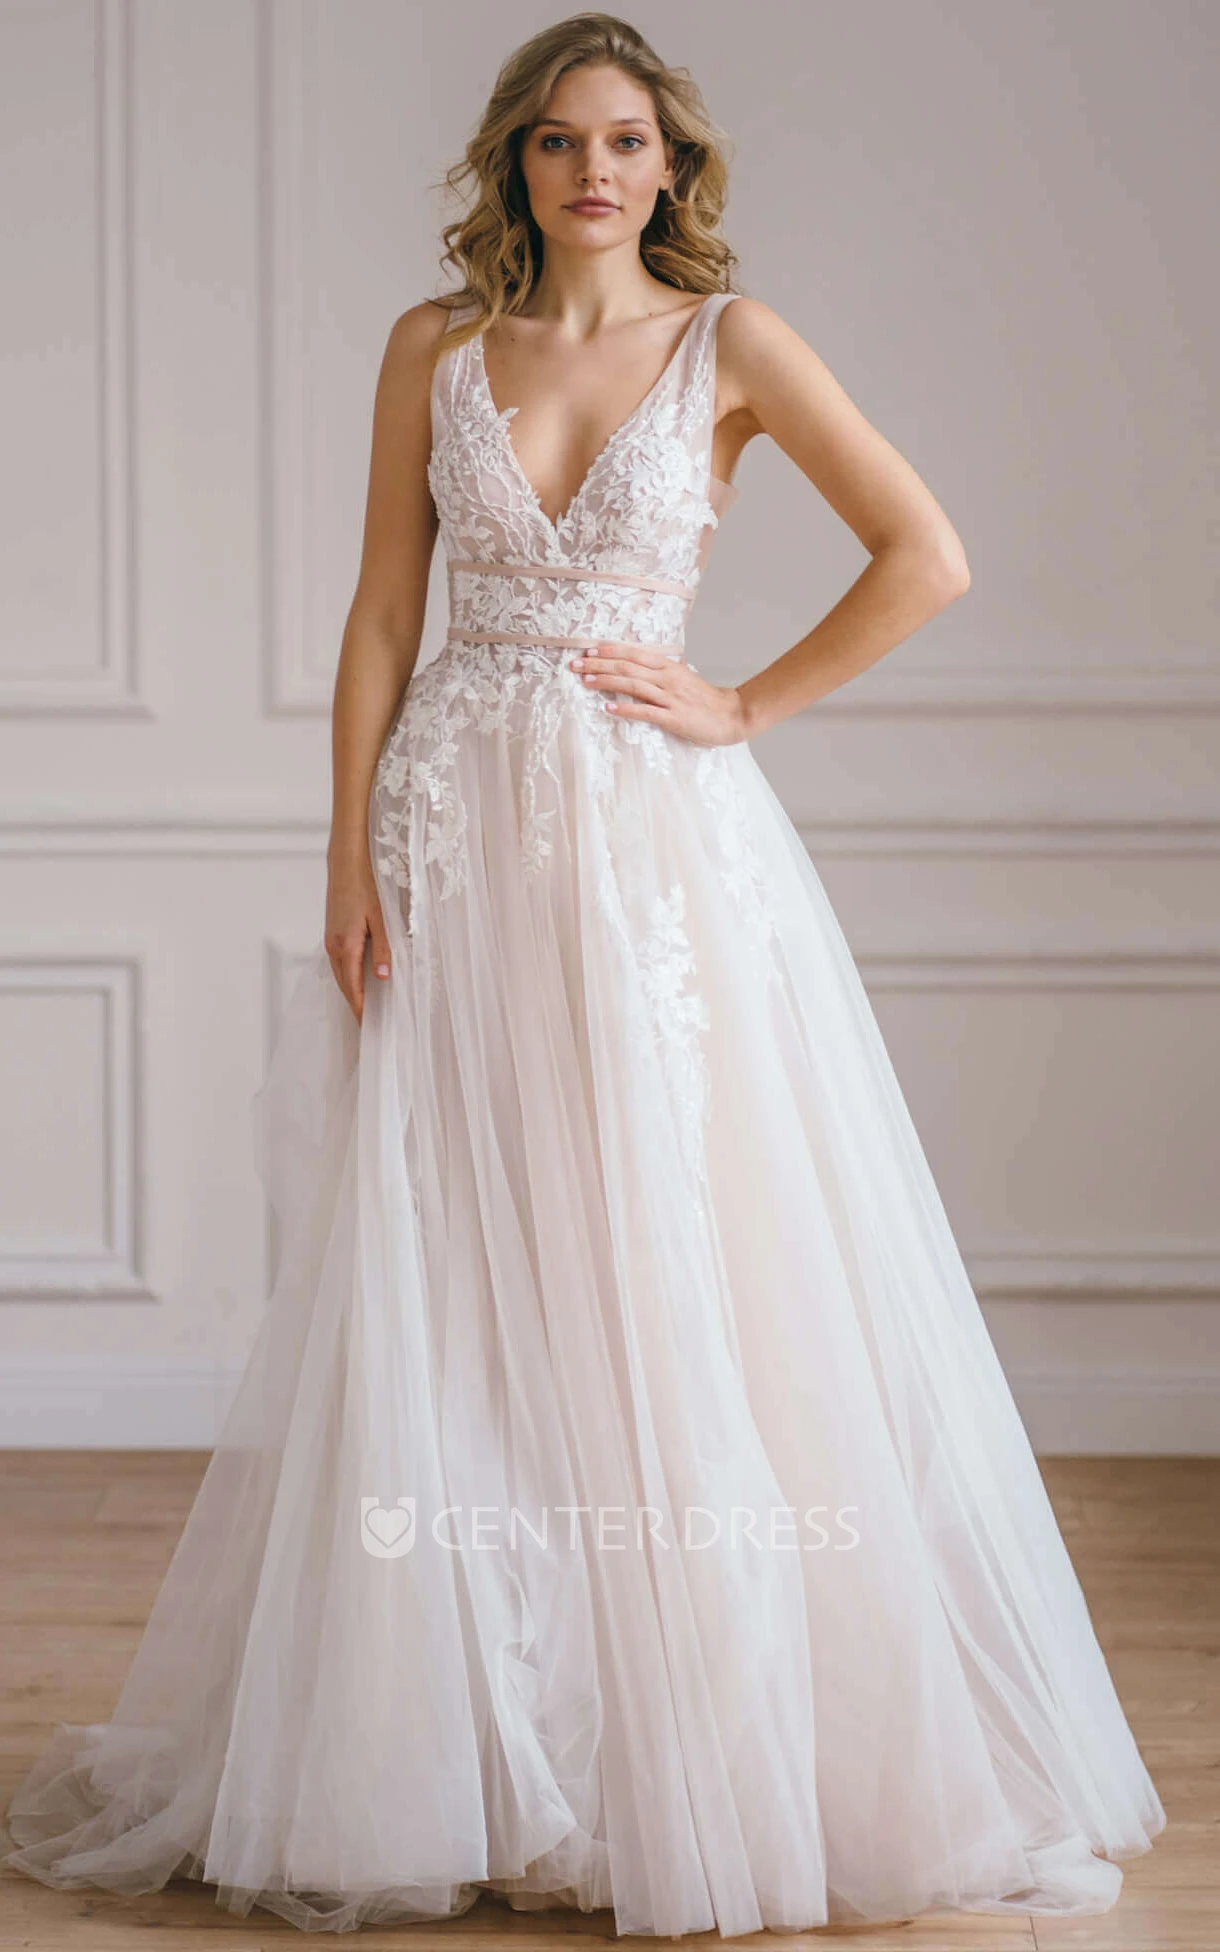 Ucenter Dress A Line Garden Floor-Length Bow Sash Ribbon Lace Wedding Dress - White, Size 24W